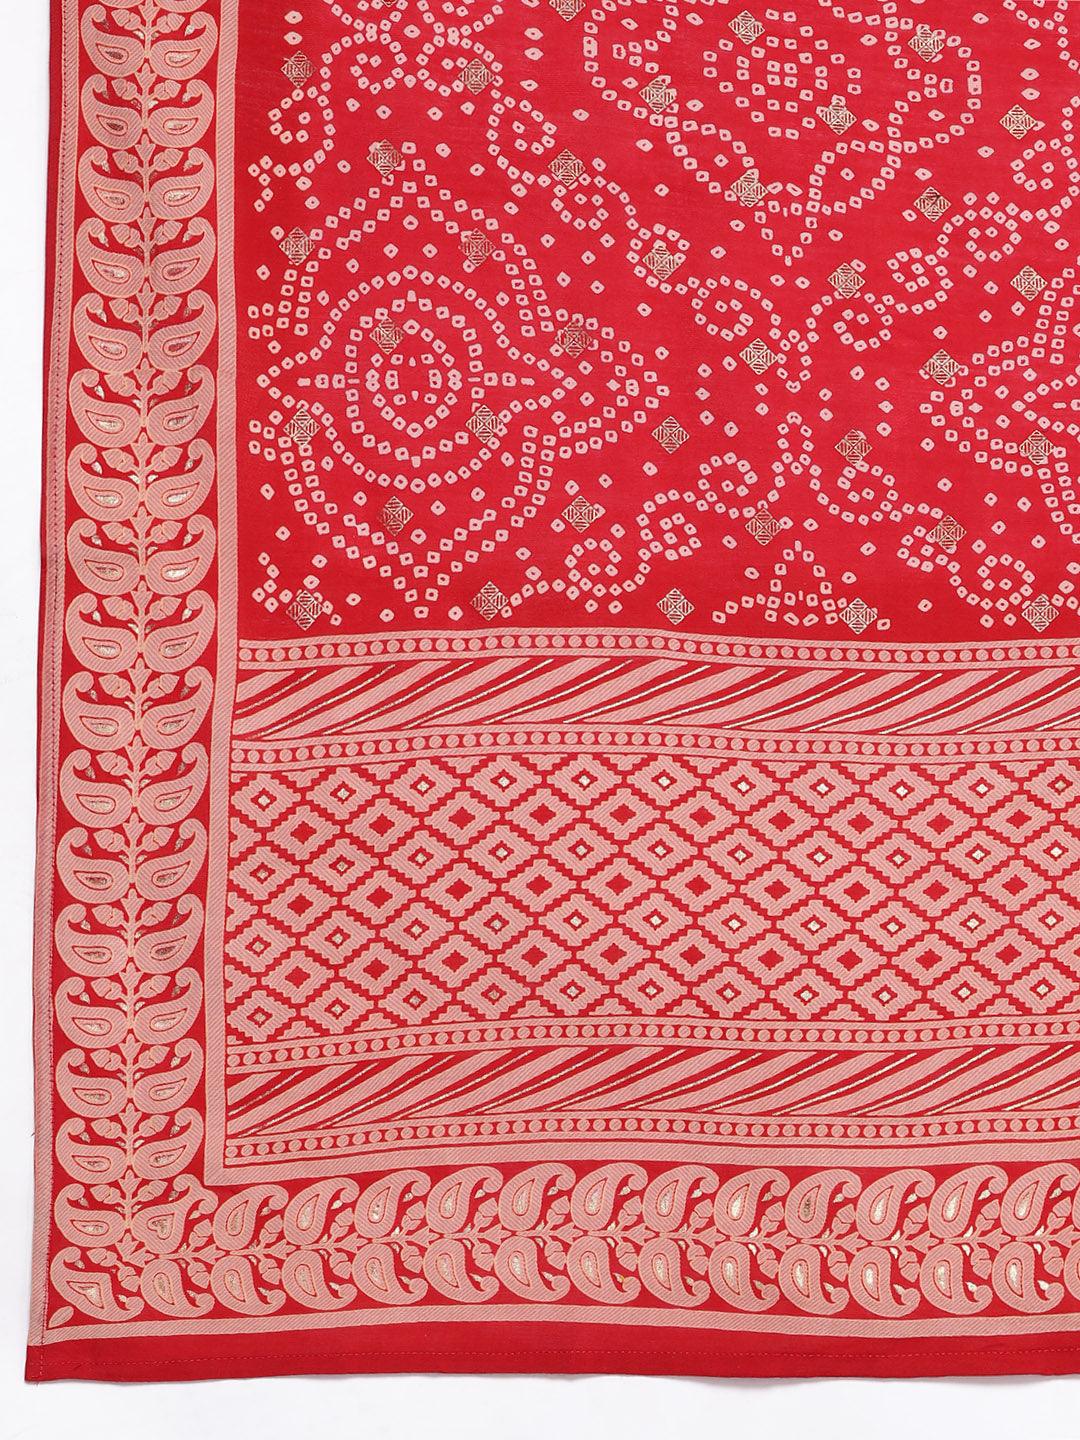 Red Printed Silk Blend Straight Kurta With Palazzos & Dupatta - Libas